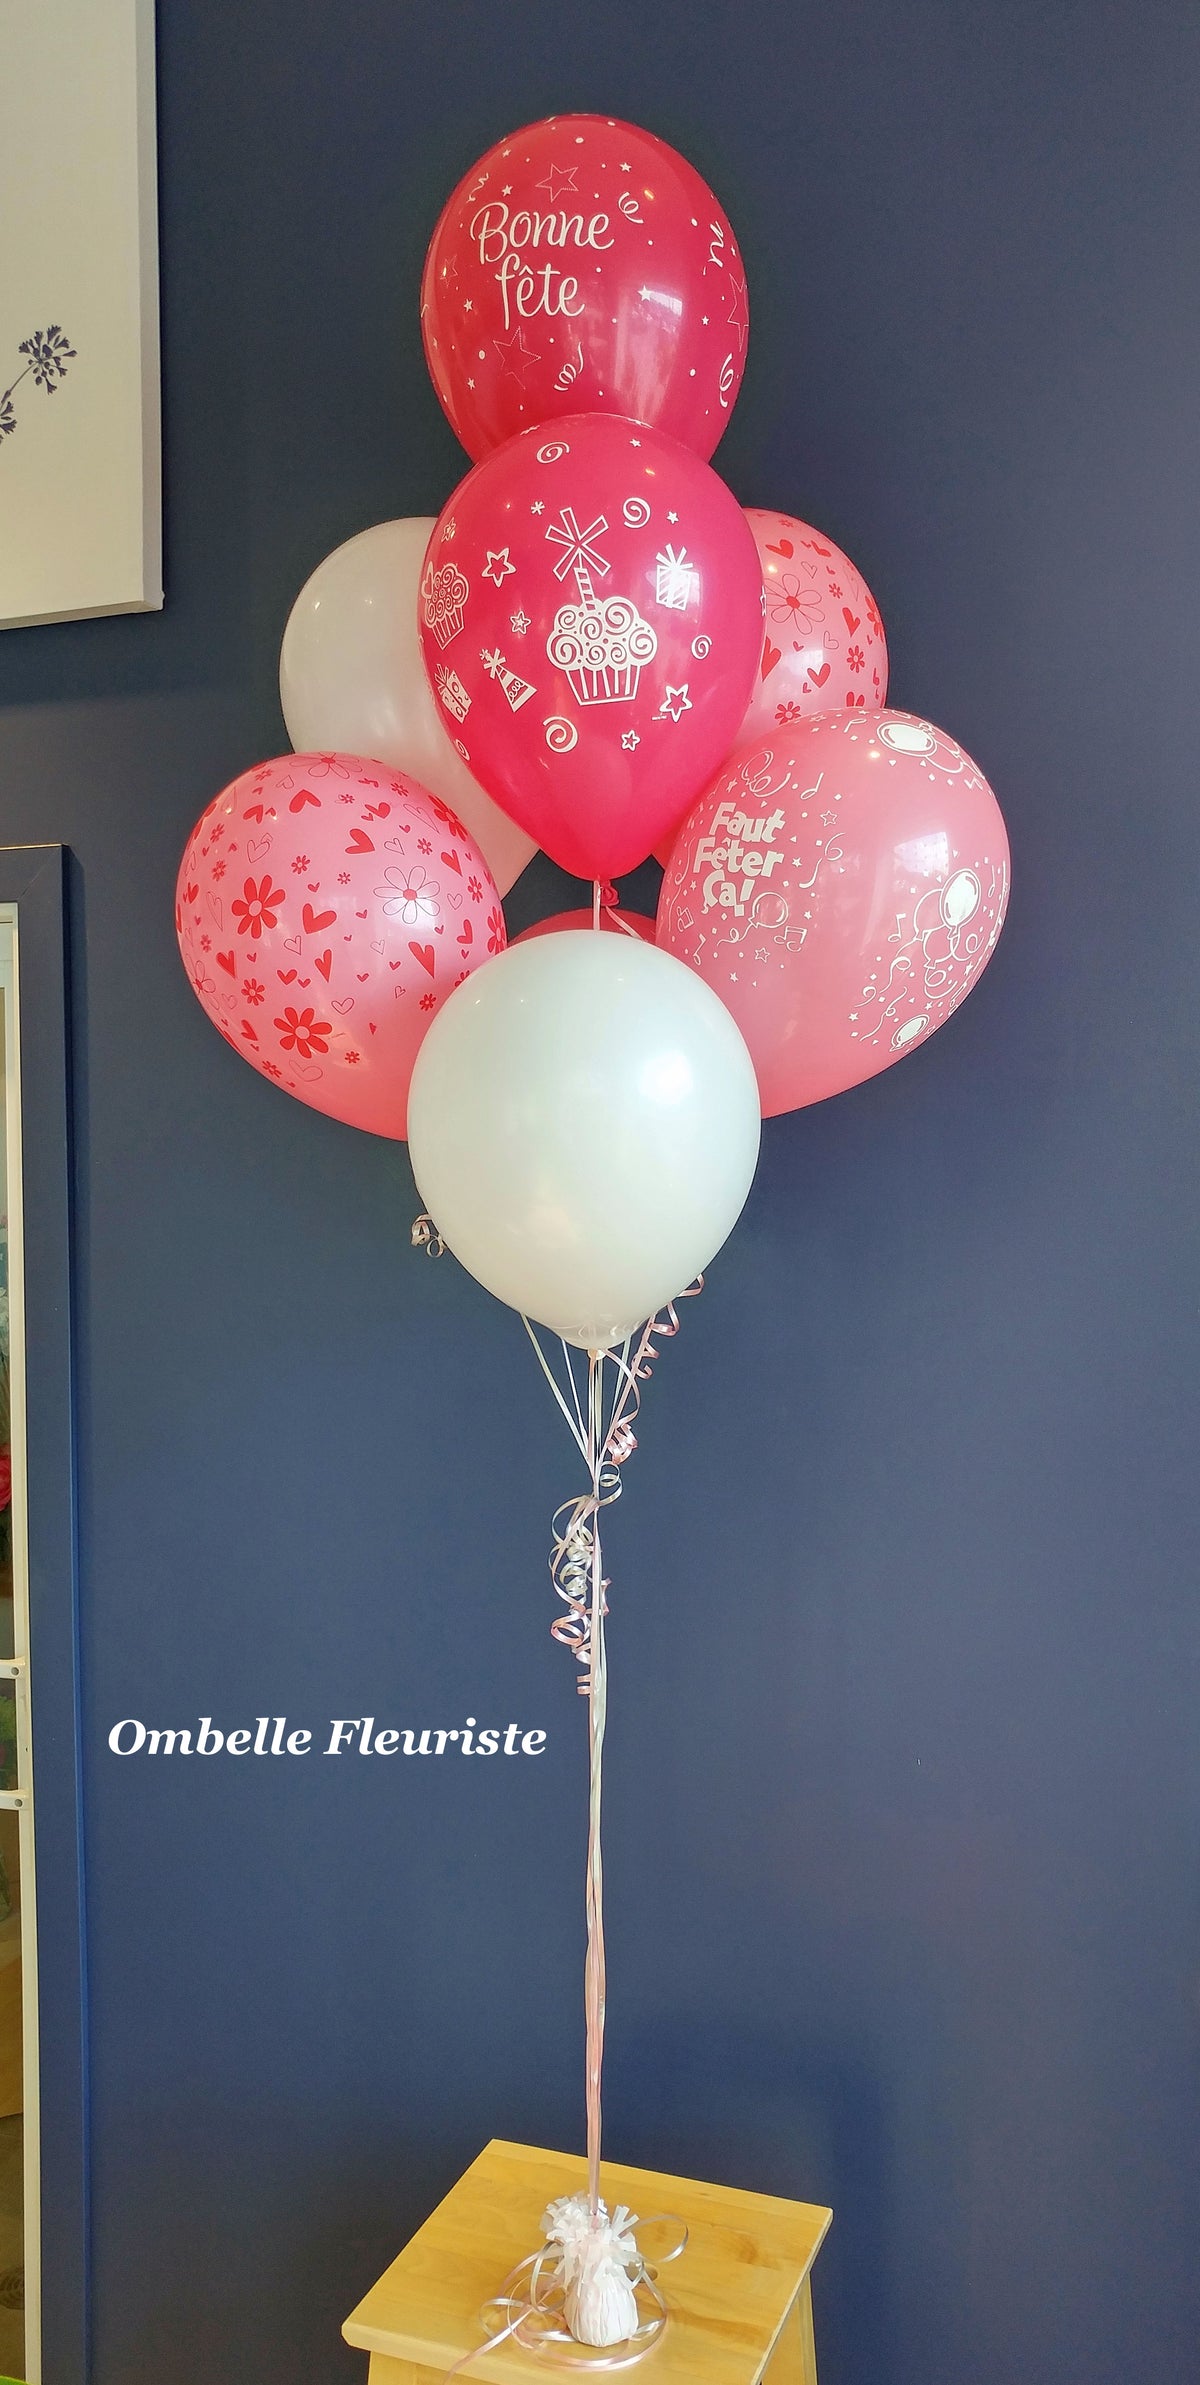 Ombelle Fleuriste - Bouquet de ballons - Rose Ballons! - BAL-1007